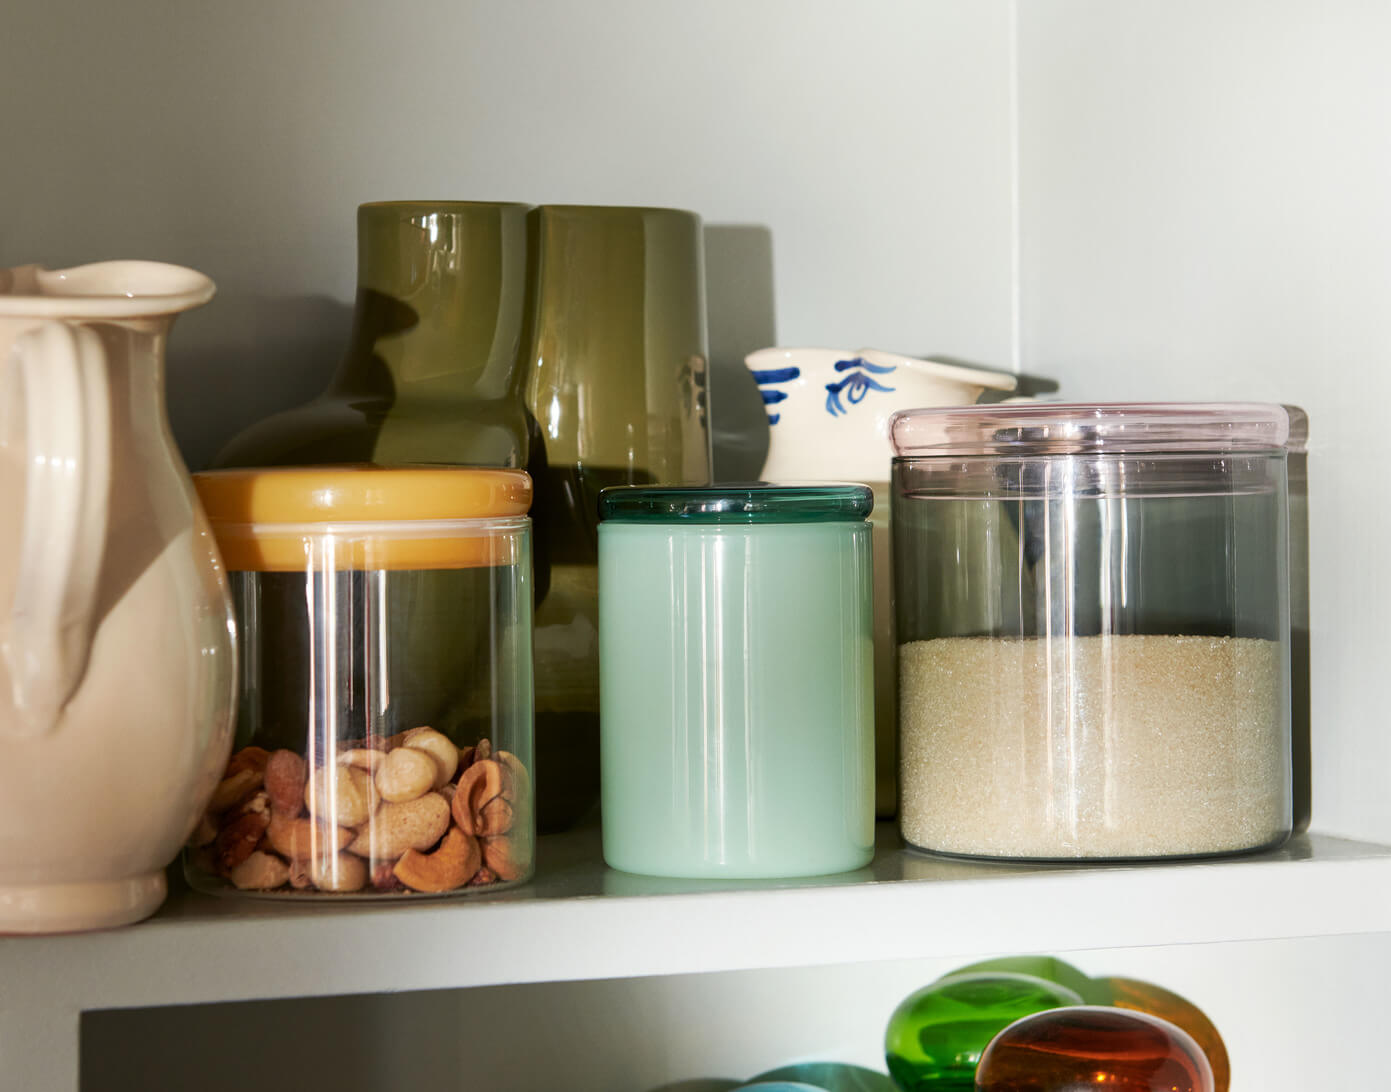 Borosilicate Jar | Grey & Pink | Glass | by HAY - Lifestory - HAY